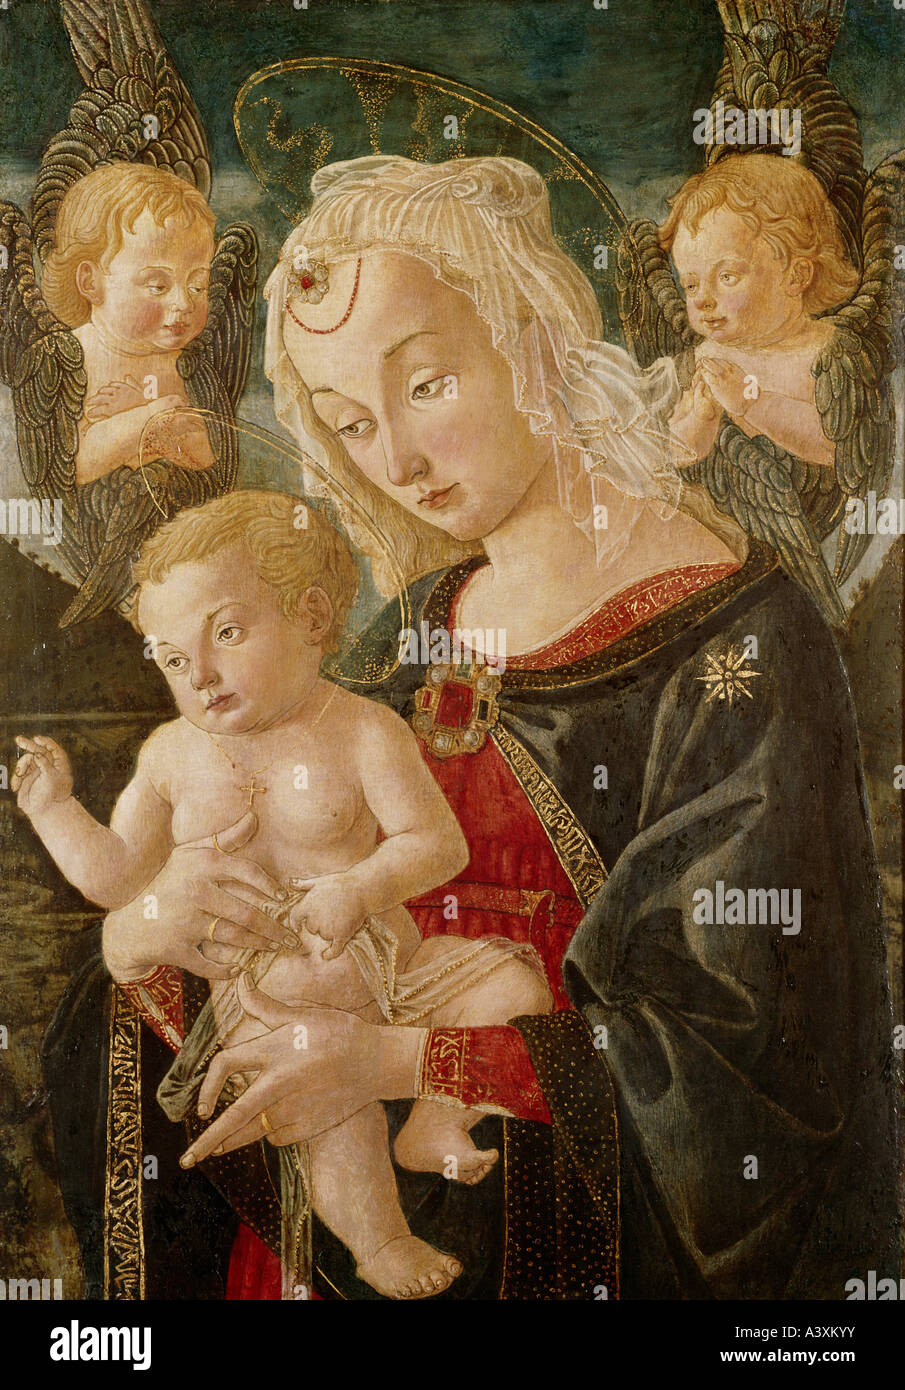 'Fine Arts, Fiorentino, Pier Francesco, (vers 1444 - 1497), peinture, 'Madonna', Zagreb, historique, historique, Europa, l'Italie, Banque D'Images